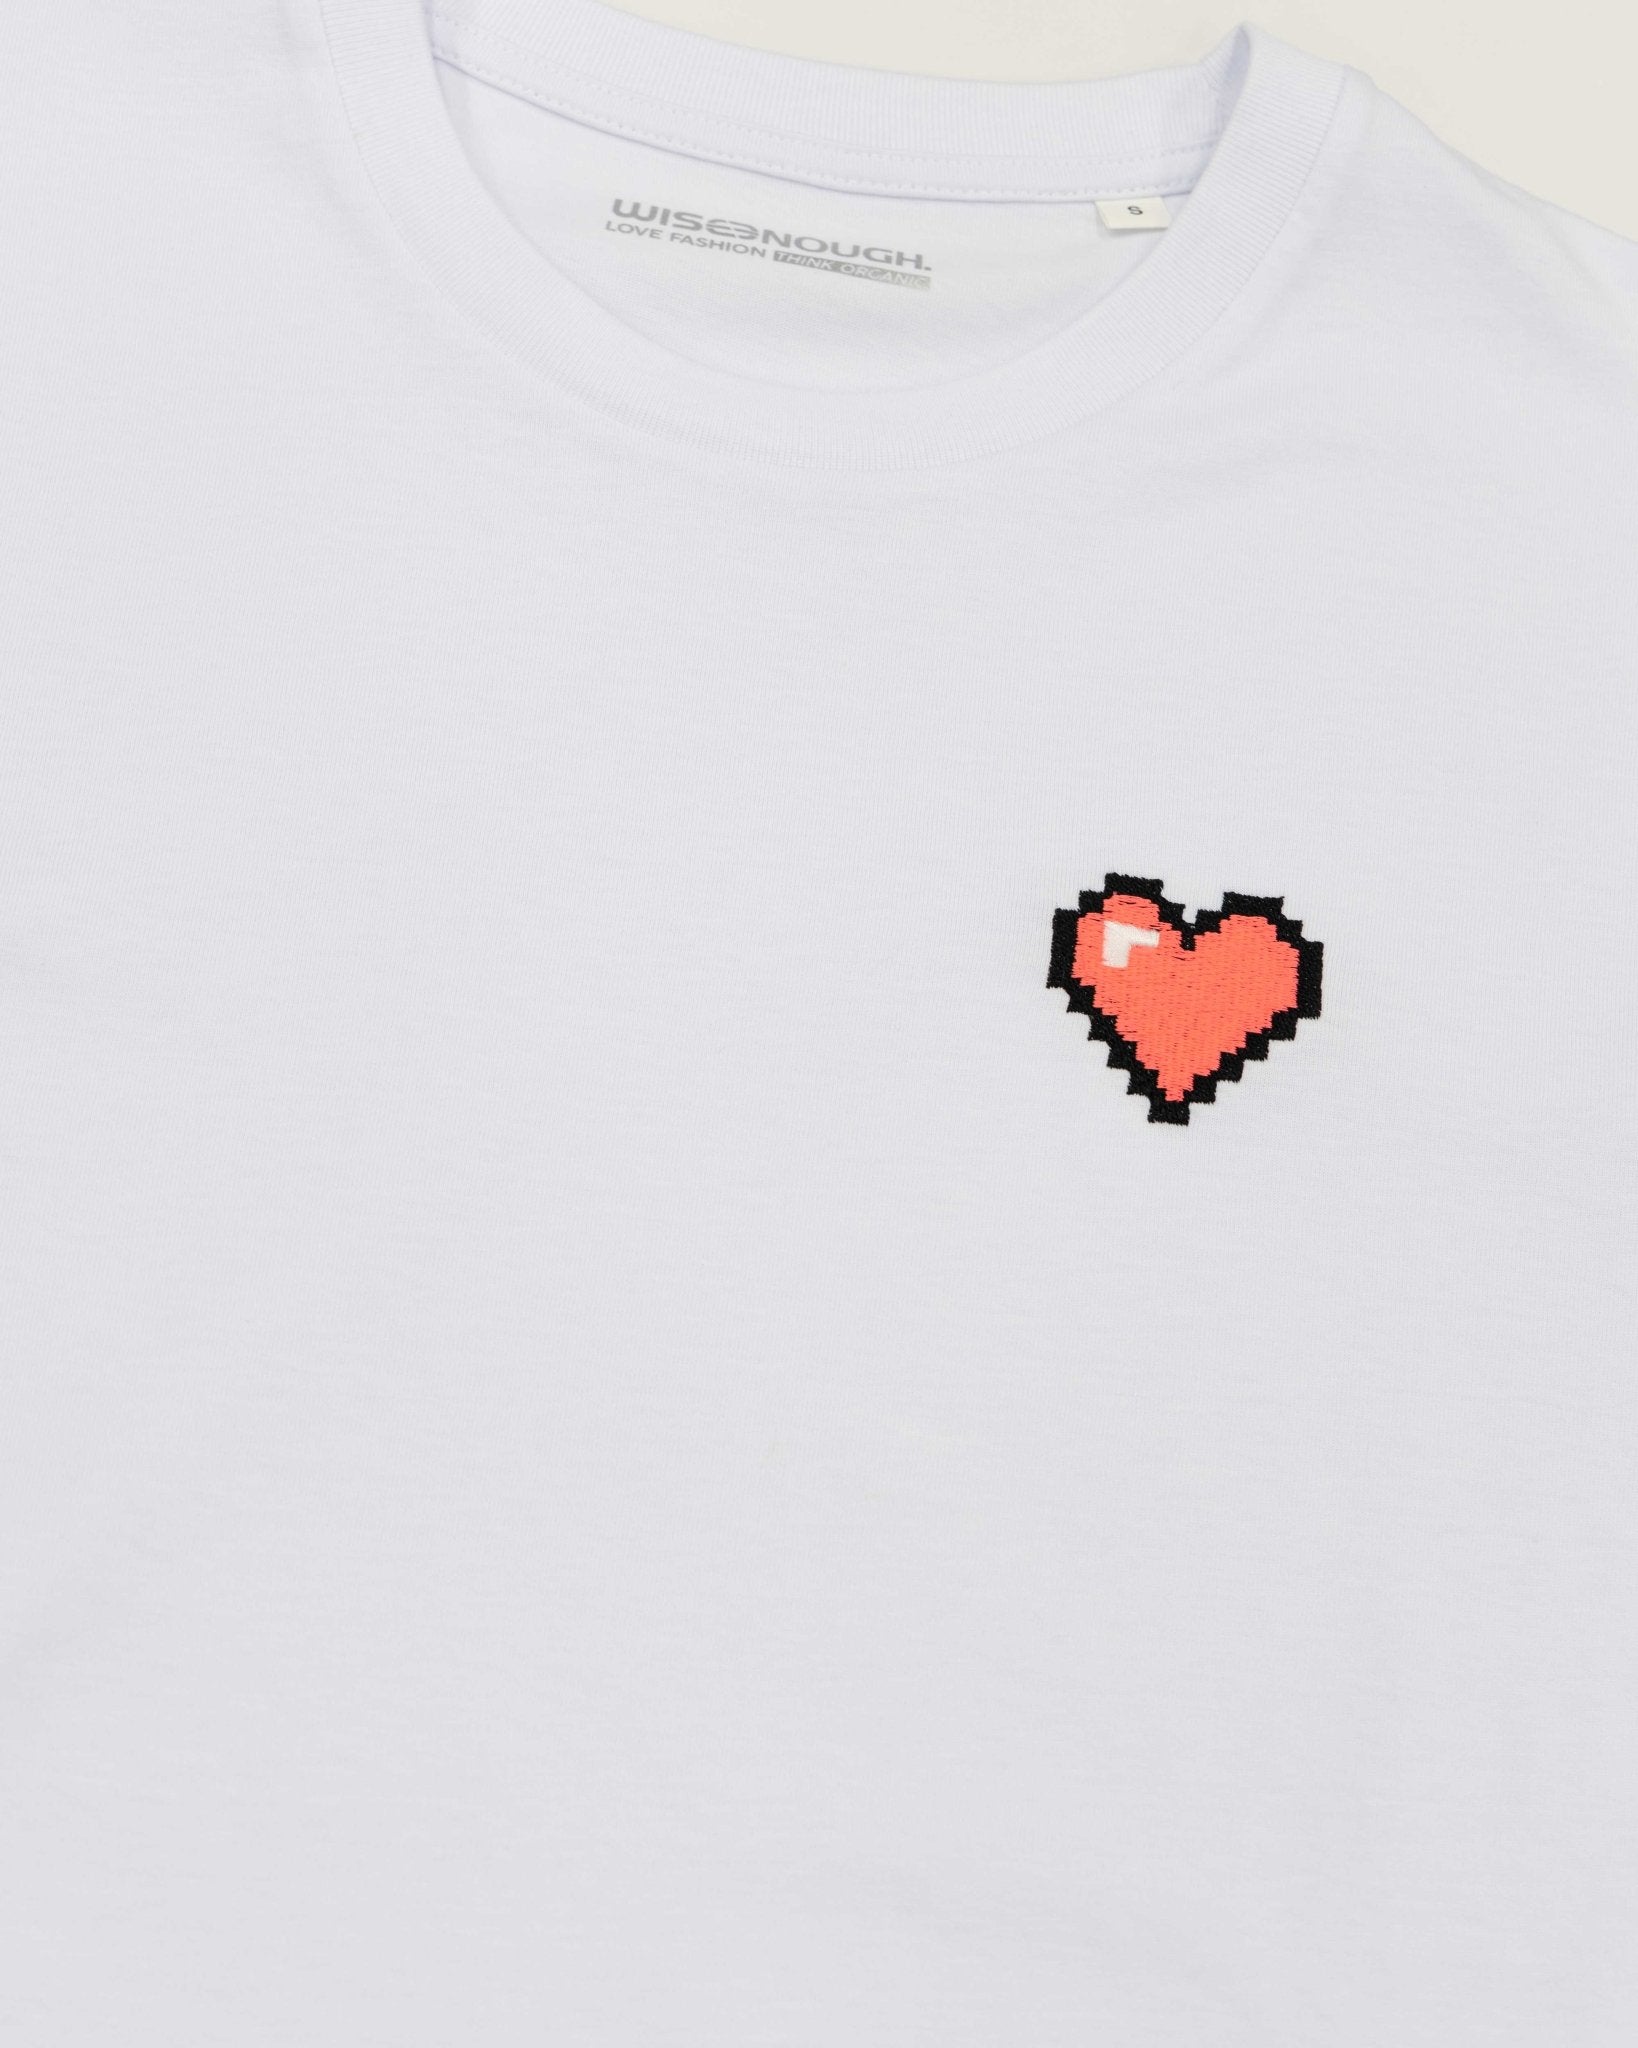 Unisex T-Shirt - Pixelheart - wiseenough. | Nachhaltige Streetwear